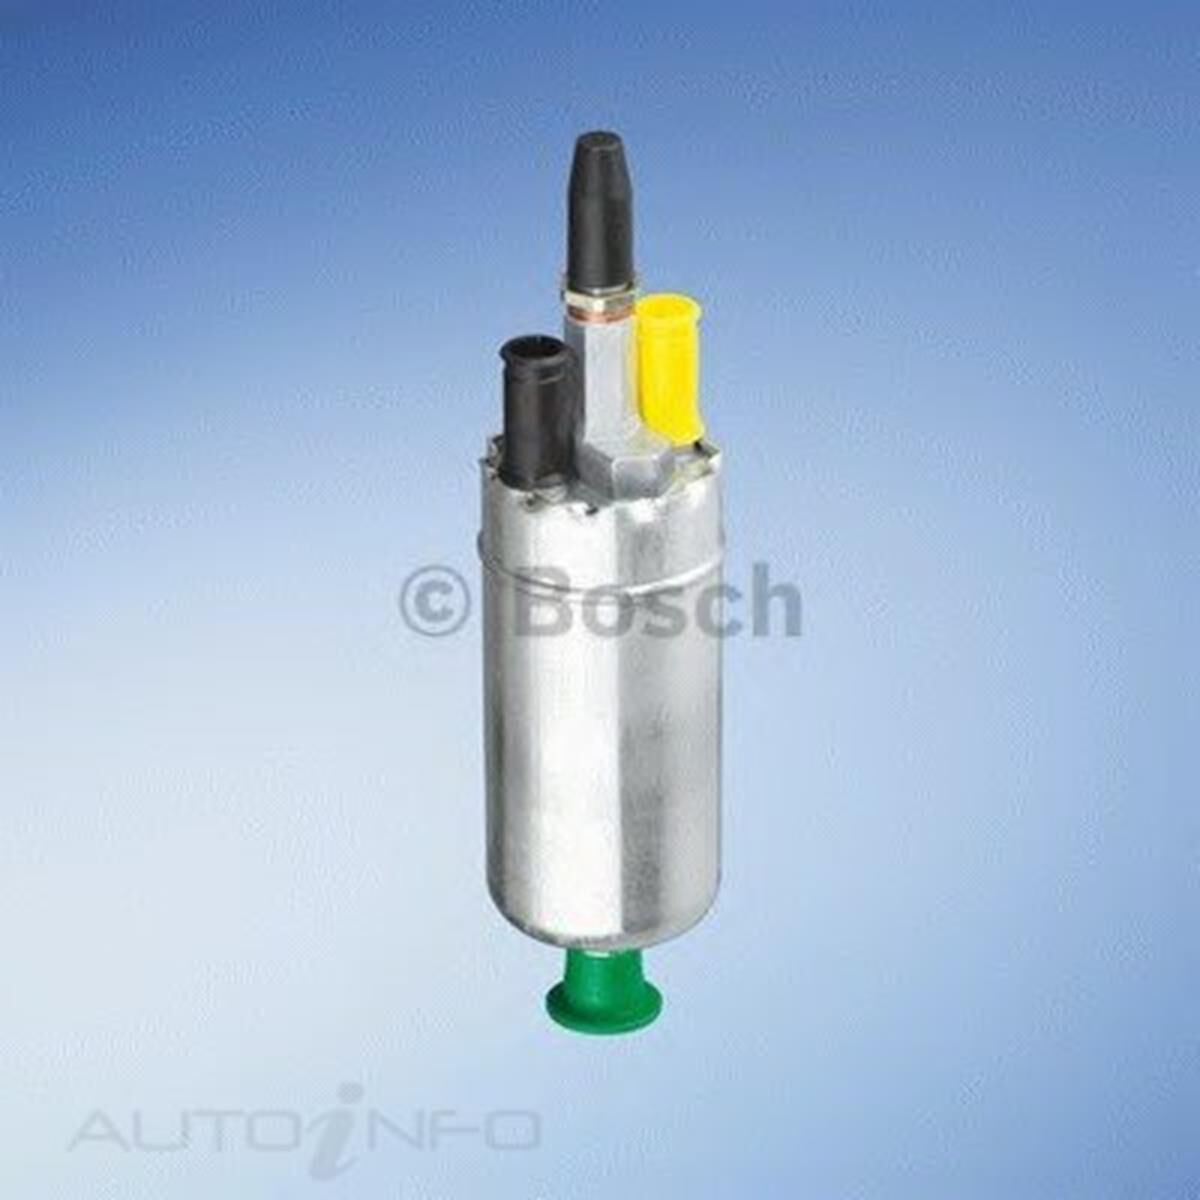 Bosch 0580254941 Electric Fuel Pump 